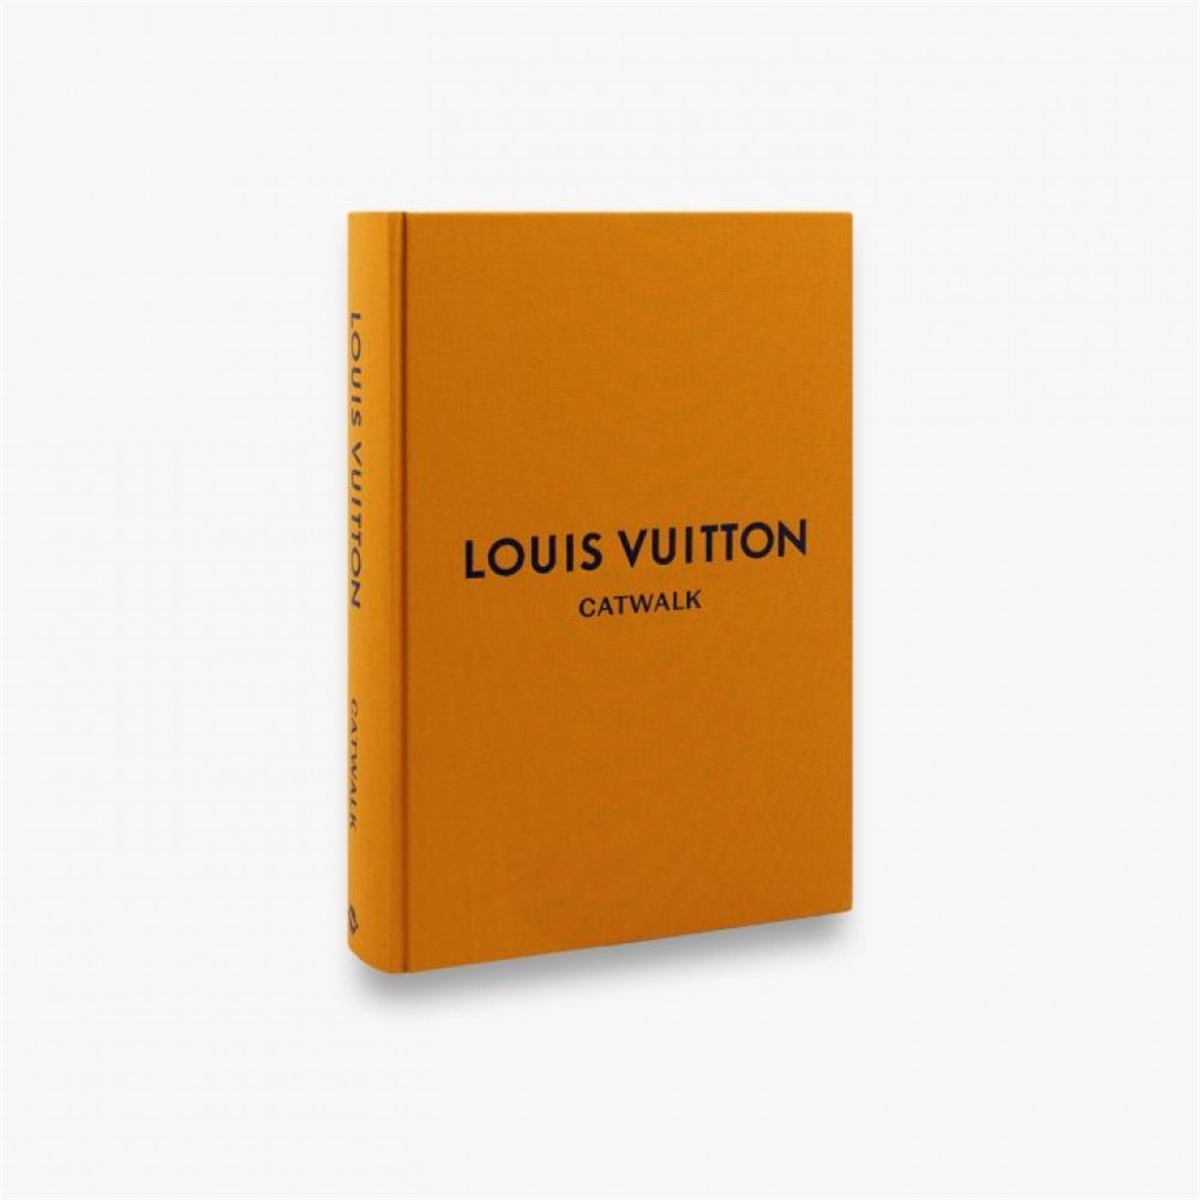 LOUIS VUITTON CATWALK BOOK UNBOXING